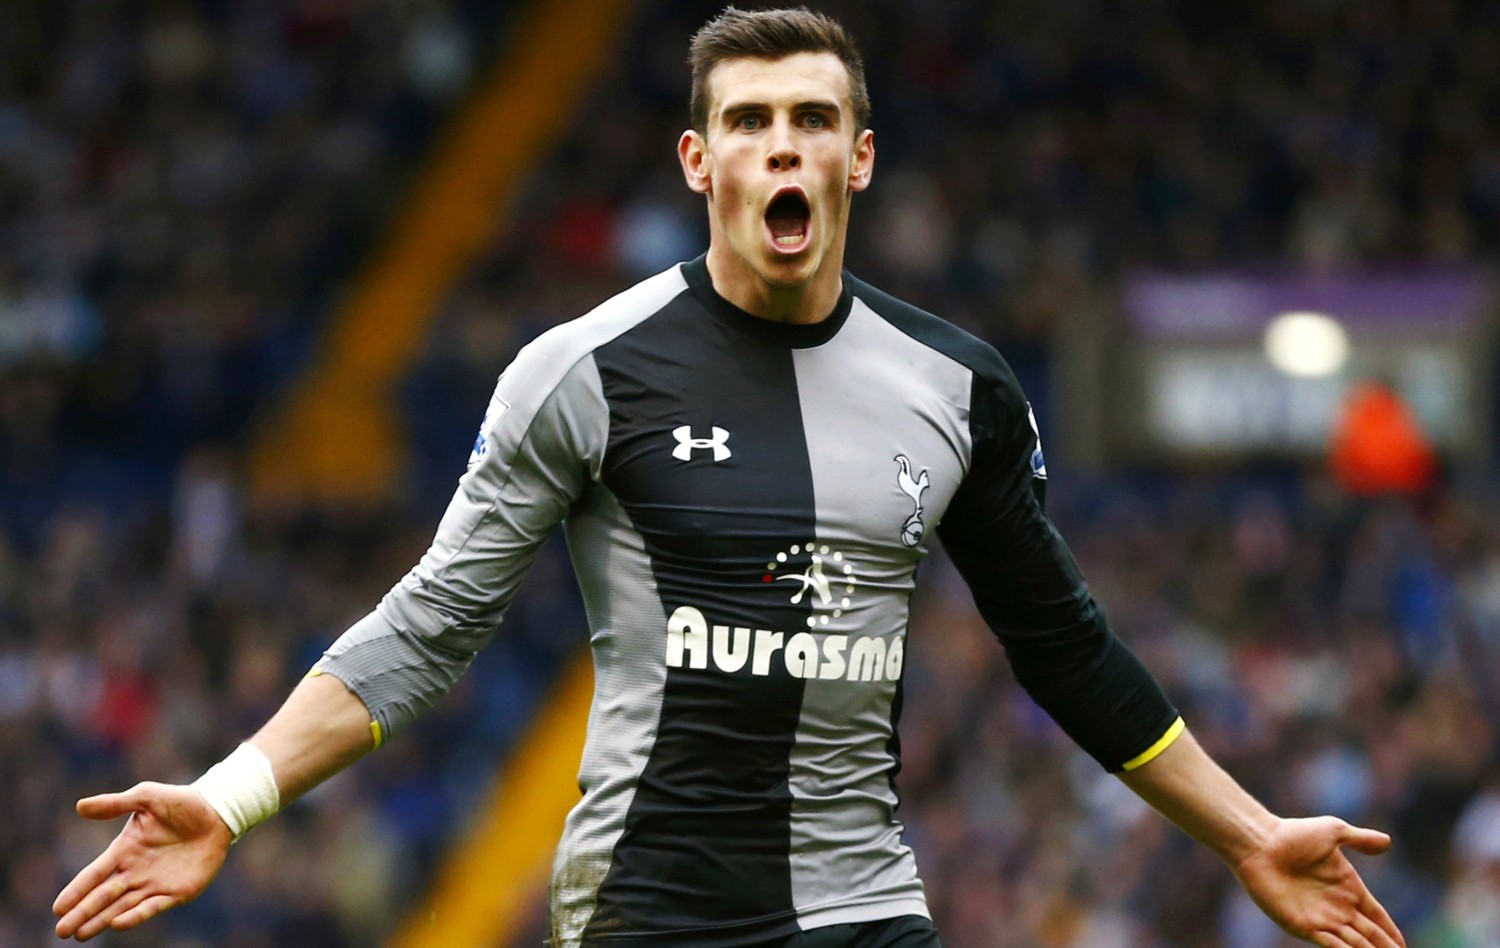 Gareth-Bale-Tottenham-Hotspur-2013-Celebration-Goal-Full-Wallpaper-HD.jpg